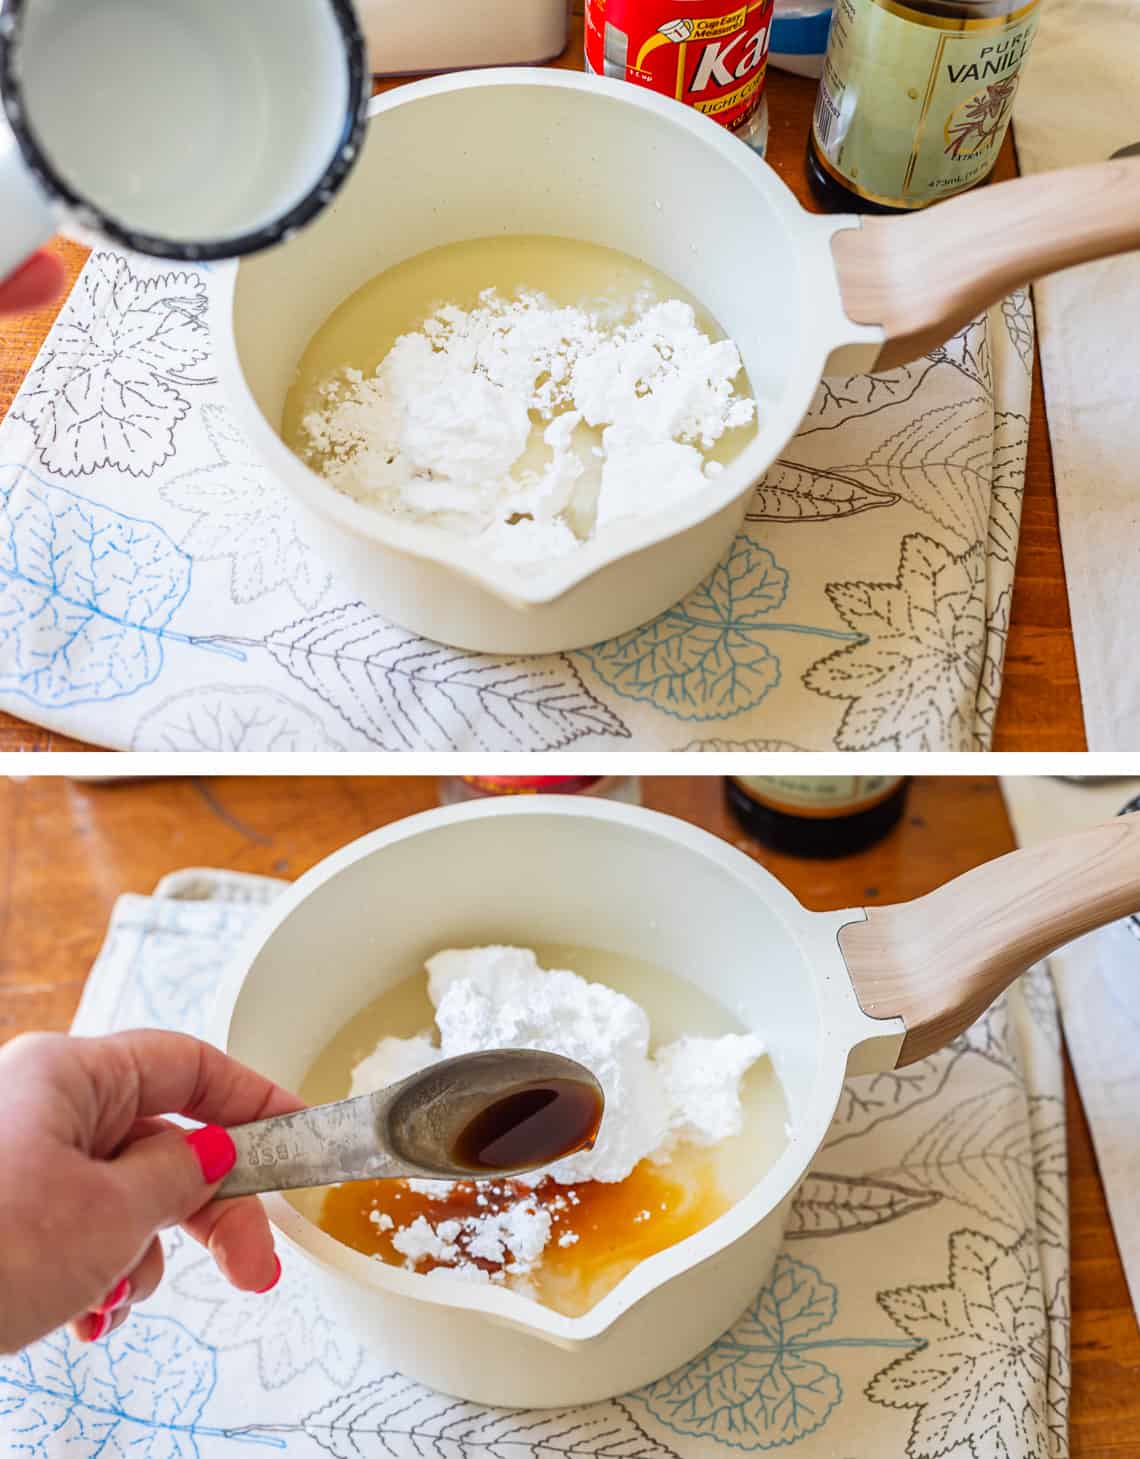 top adding powdered sugar to bowl with glaze, bottom adding vanilla to the bowl.